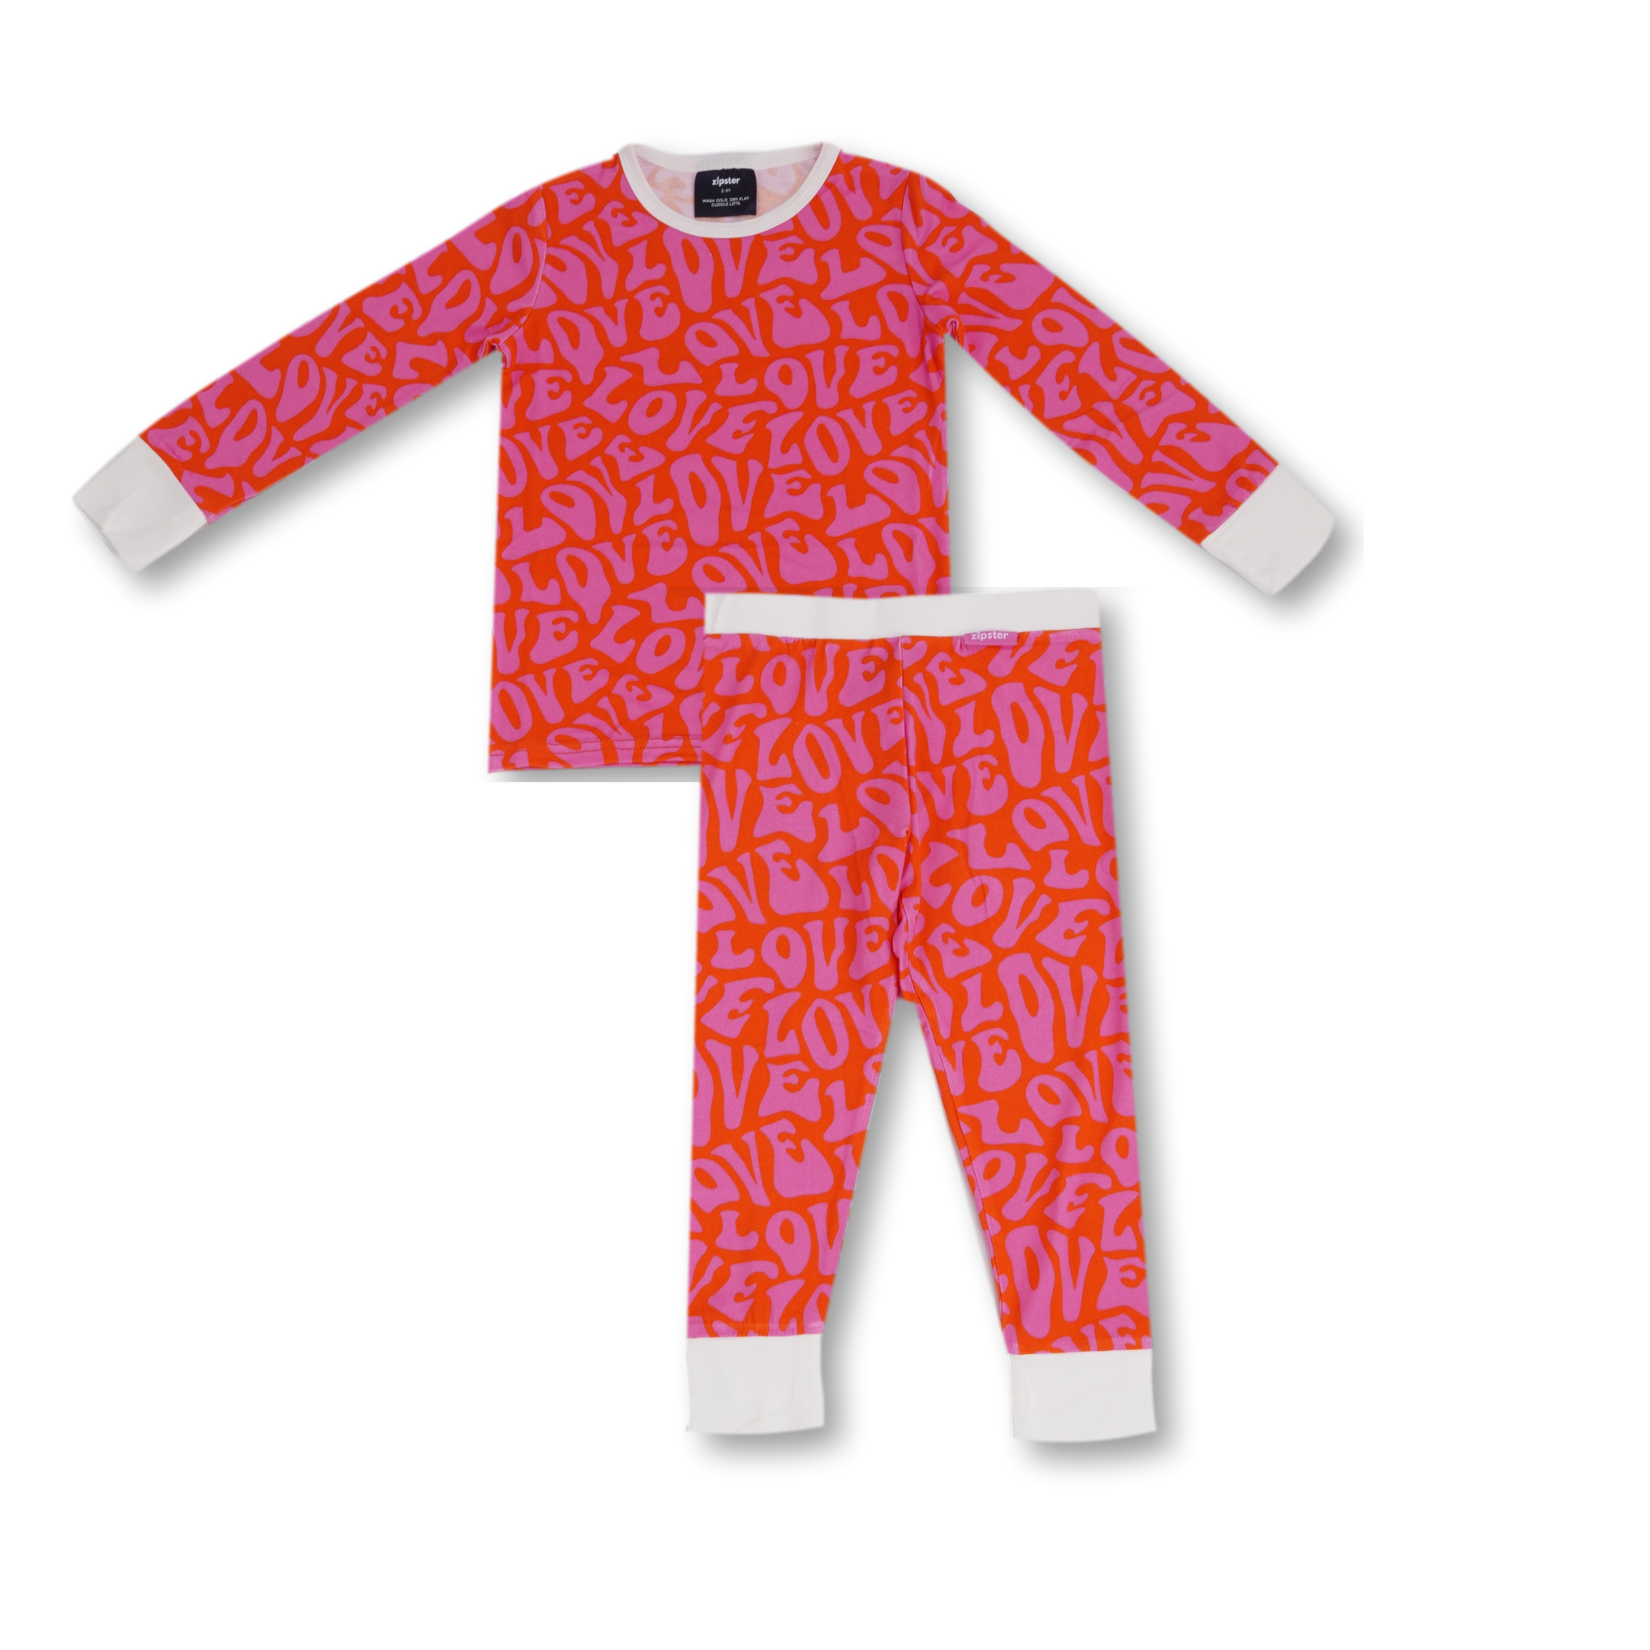 Pyjamas-set för barn Groovy Love